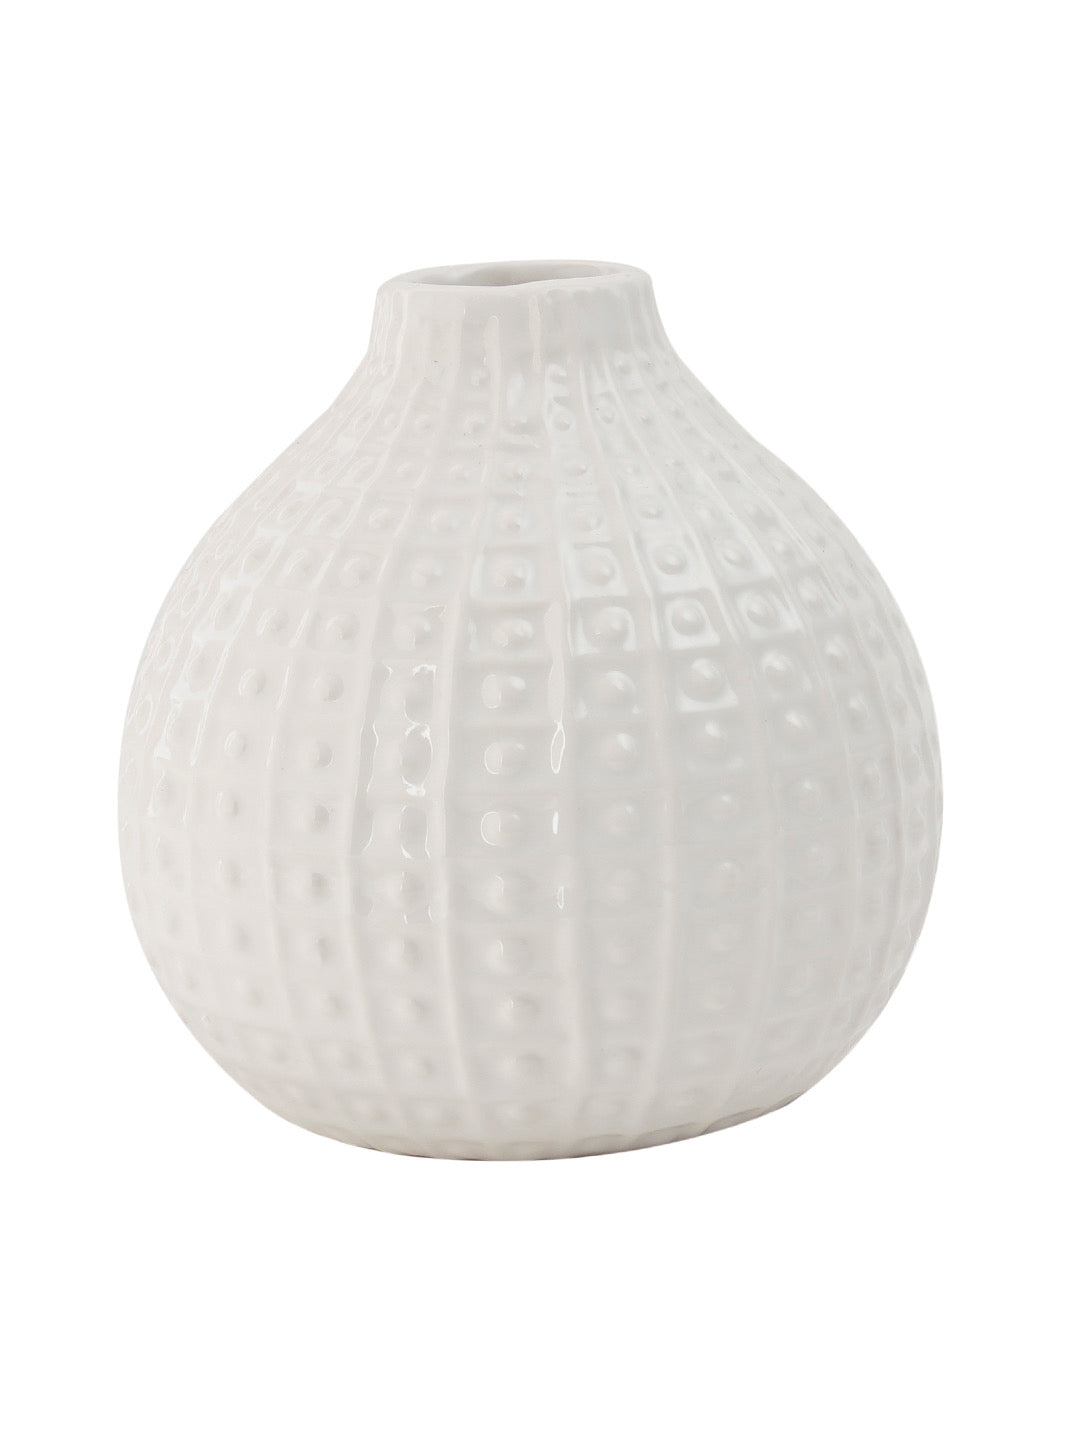 Handcrafted Ceramic Shiny White Flower Vase - Default Title (VAS20230WH)